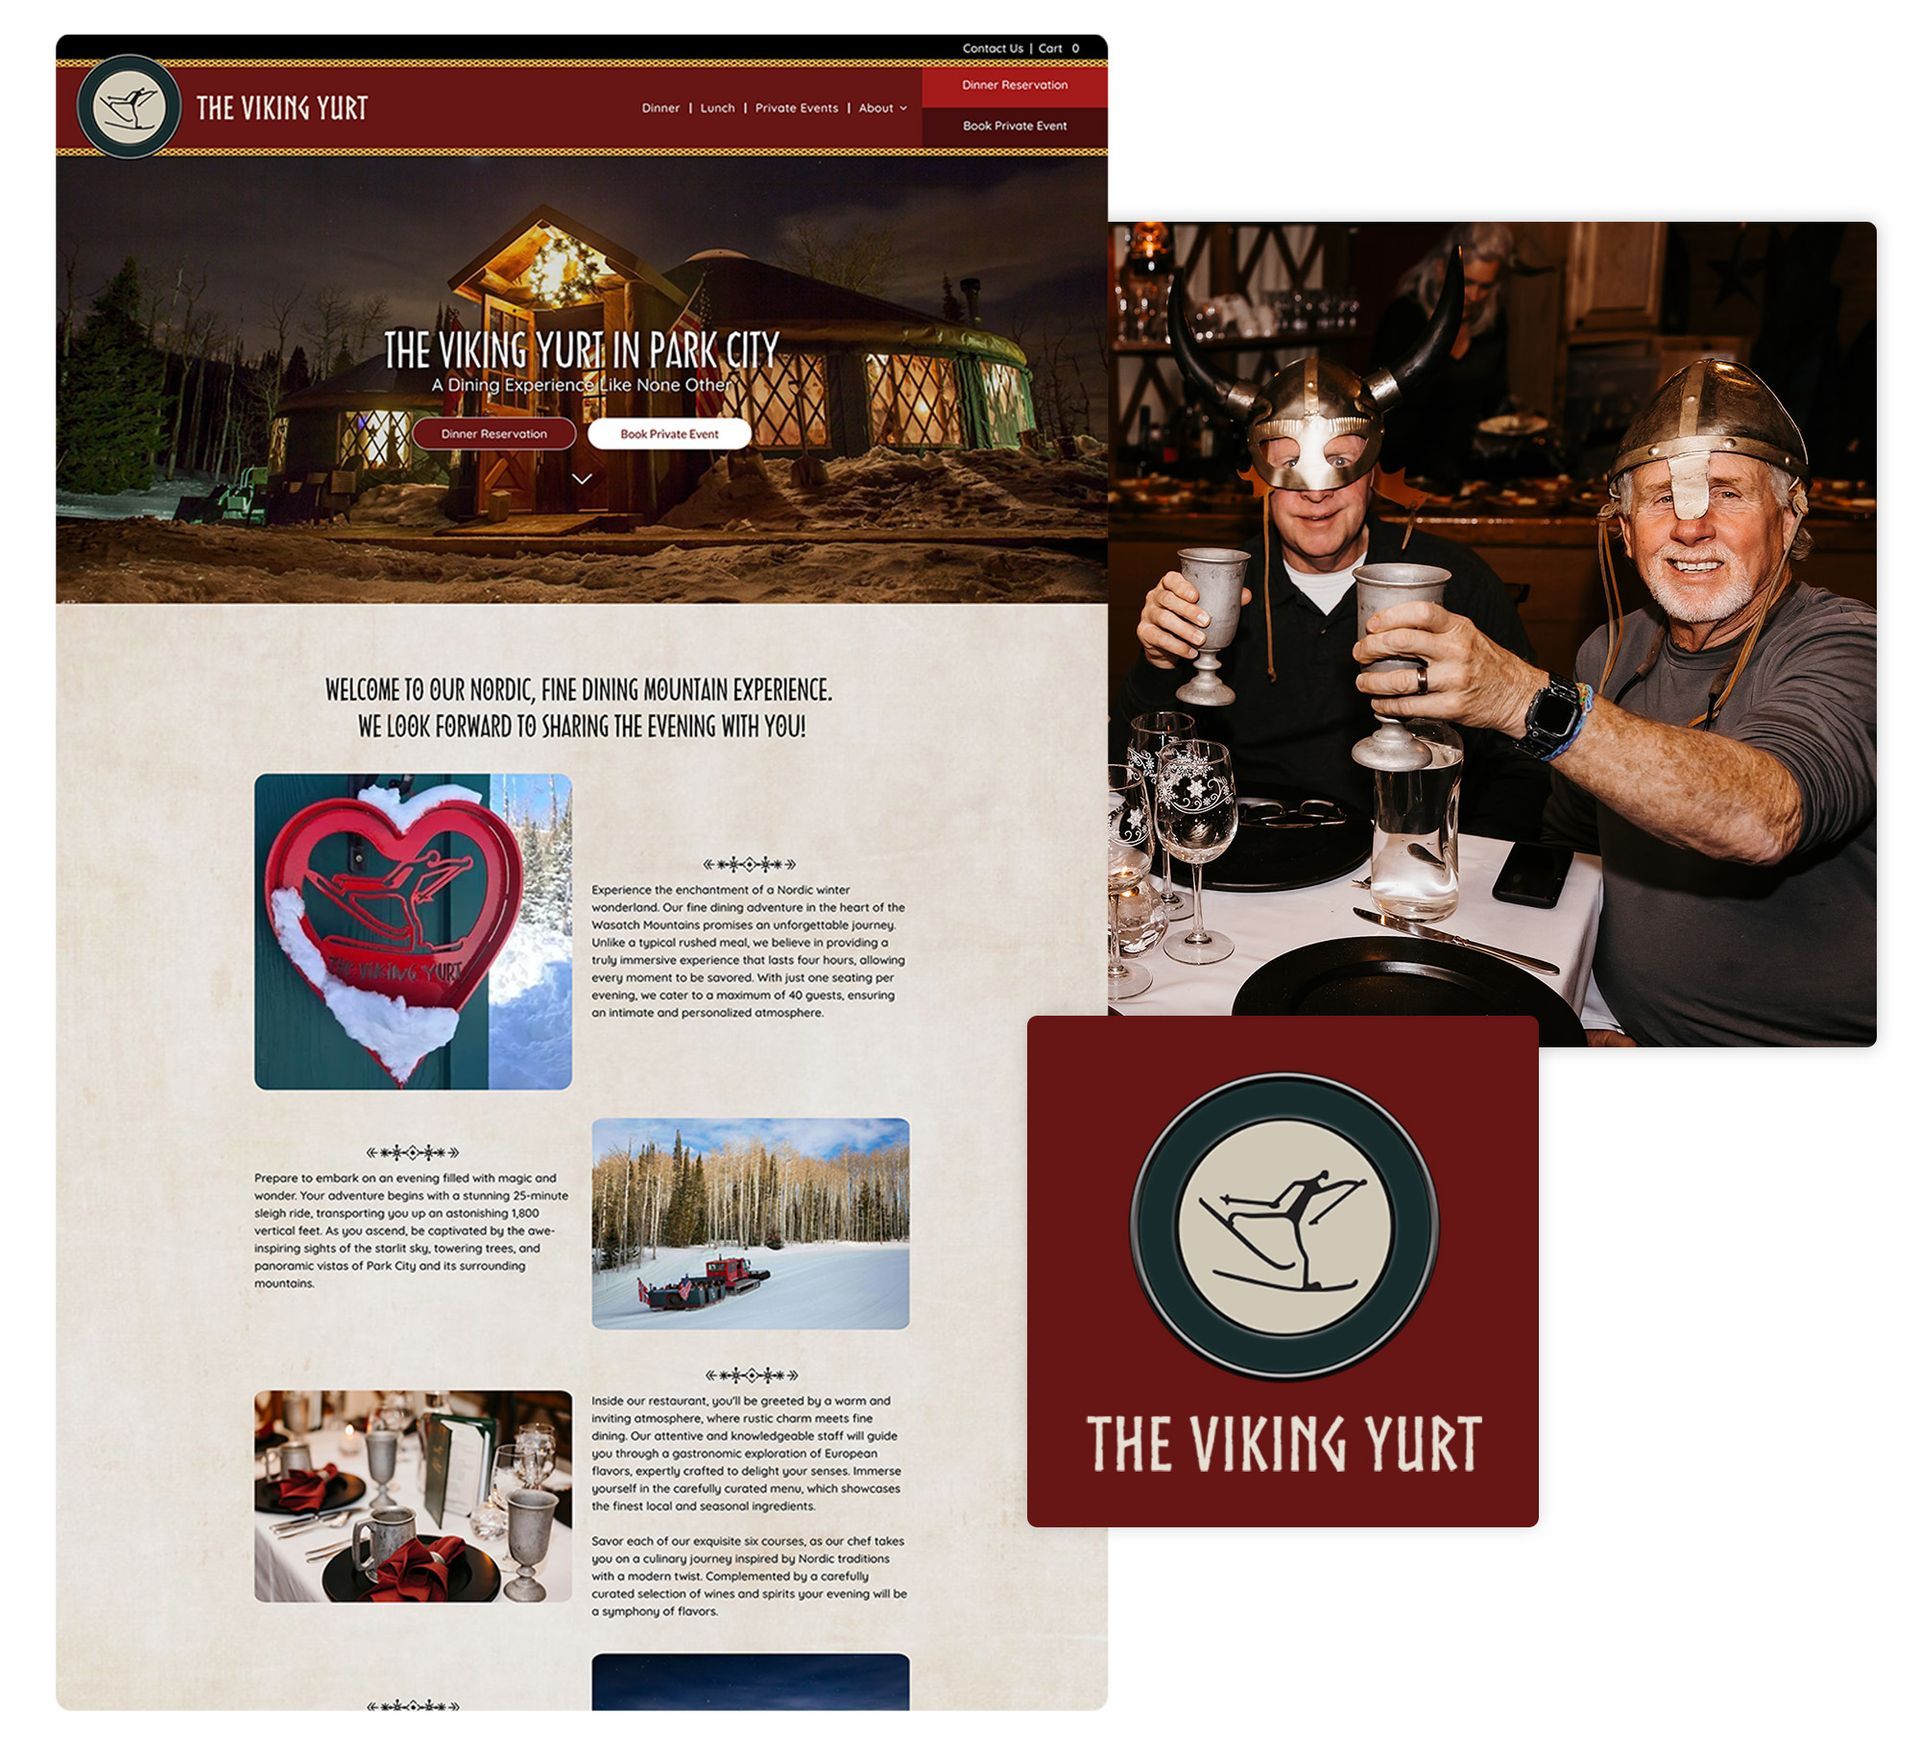 The Viking Yurt Website Images